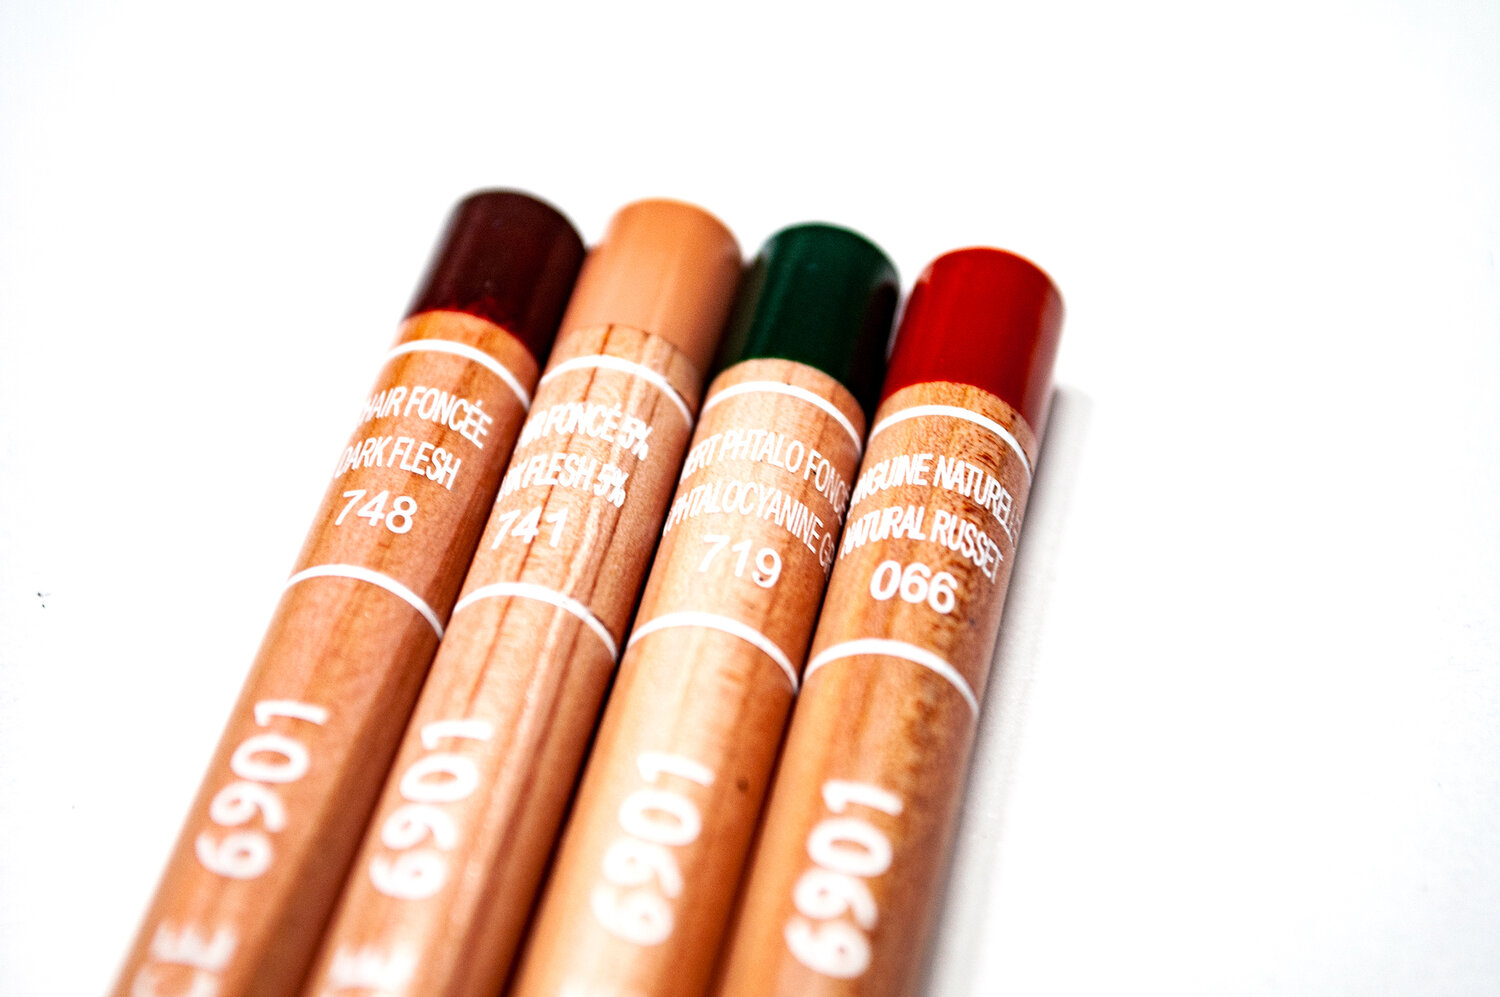 Caran D'ache Luminance Colored Pencils Set of 76 Colors Wood Box